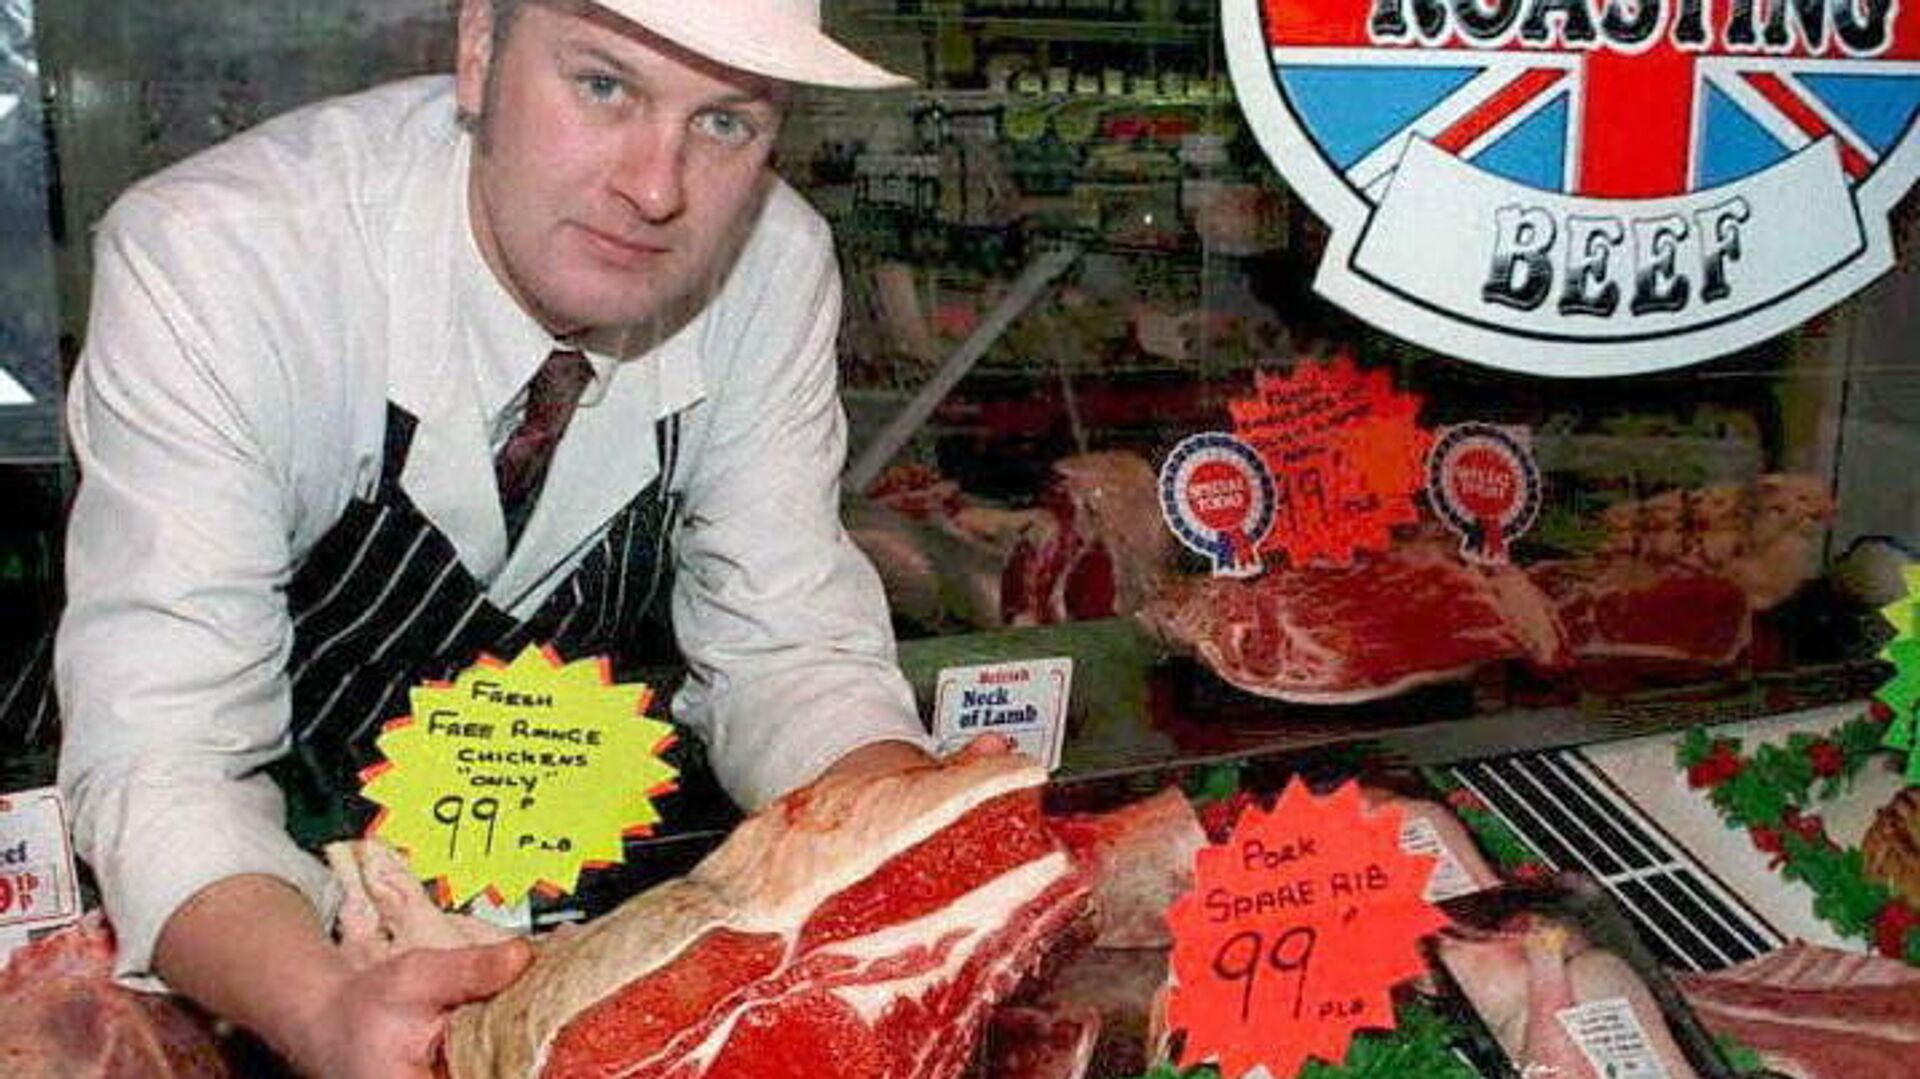 York Butcher Guy Dambrauskas holds ribs of beef in his shop window (File) - Sputnik International, 1920, 01.10.2021